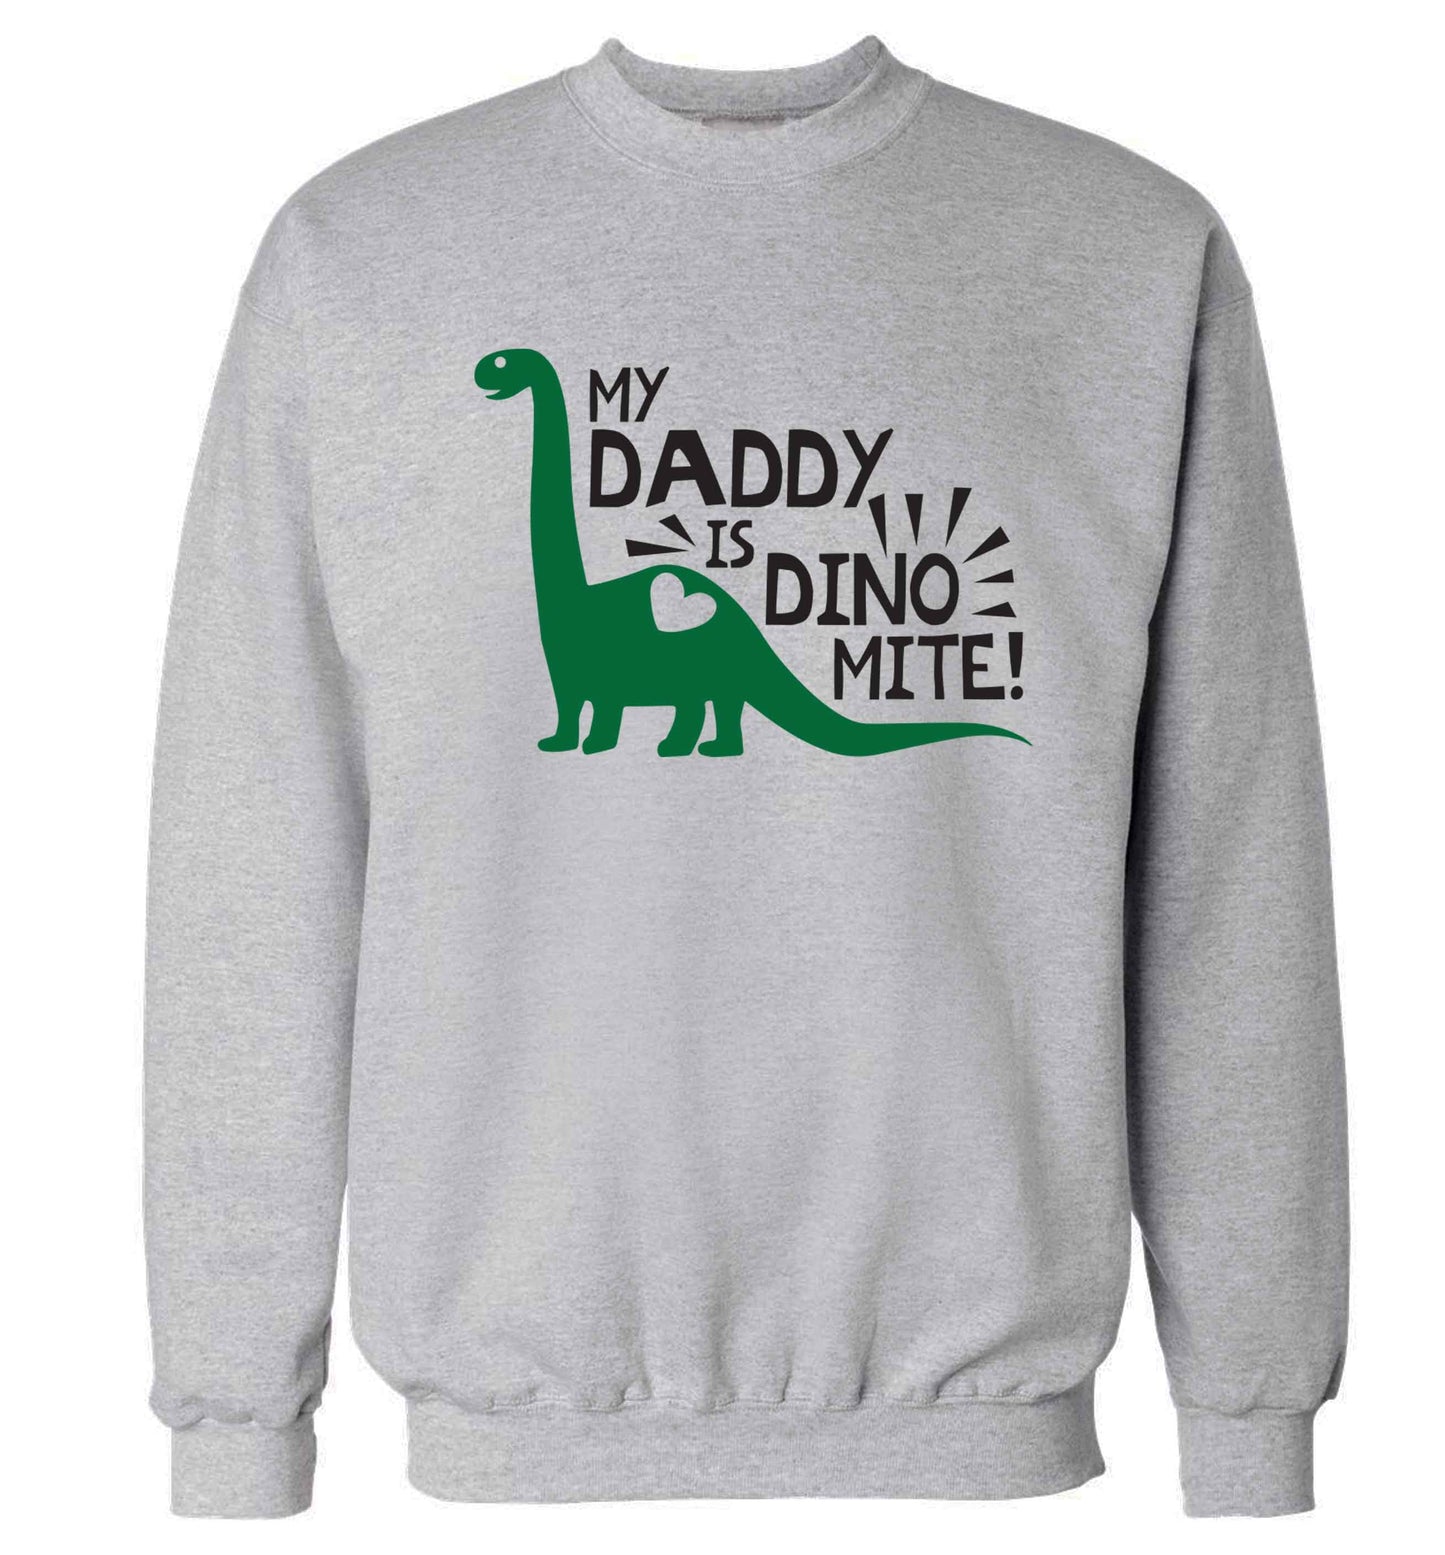 My daddy is dinomite! Adult's unisex grey Sweater 2XL